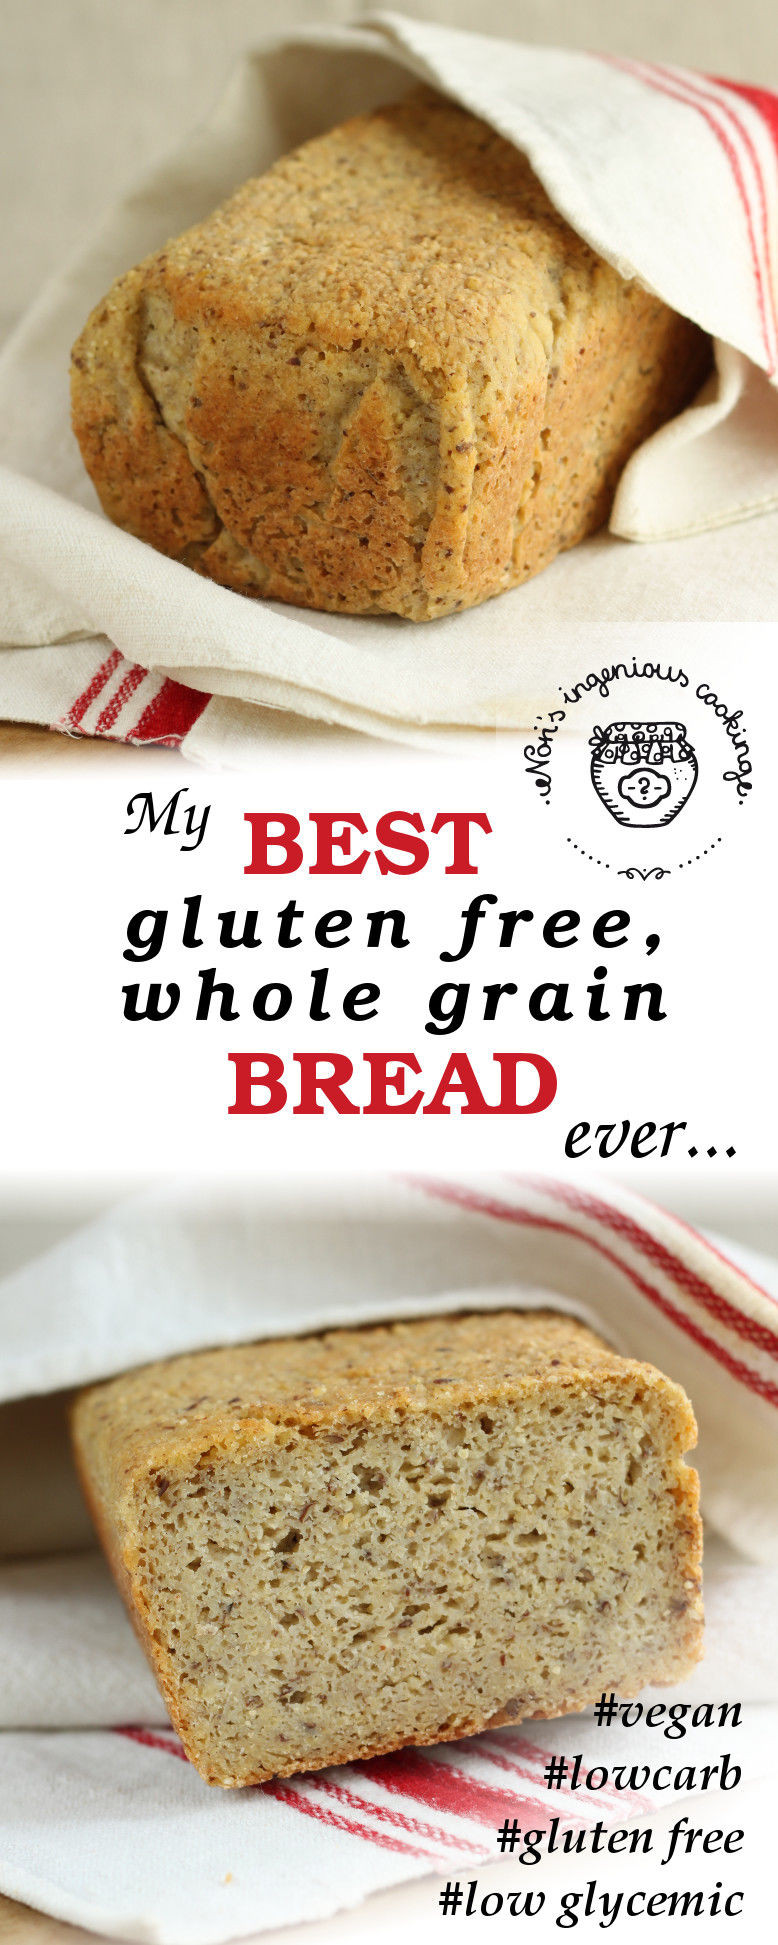 Vegan Gluten Free Bread
 My best gluten free whole grain bread ever vegan